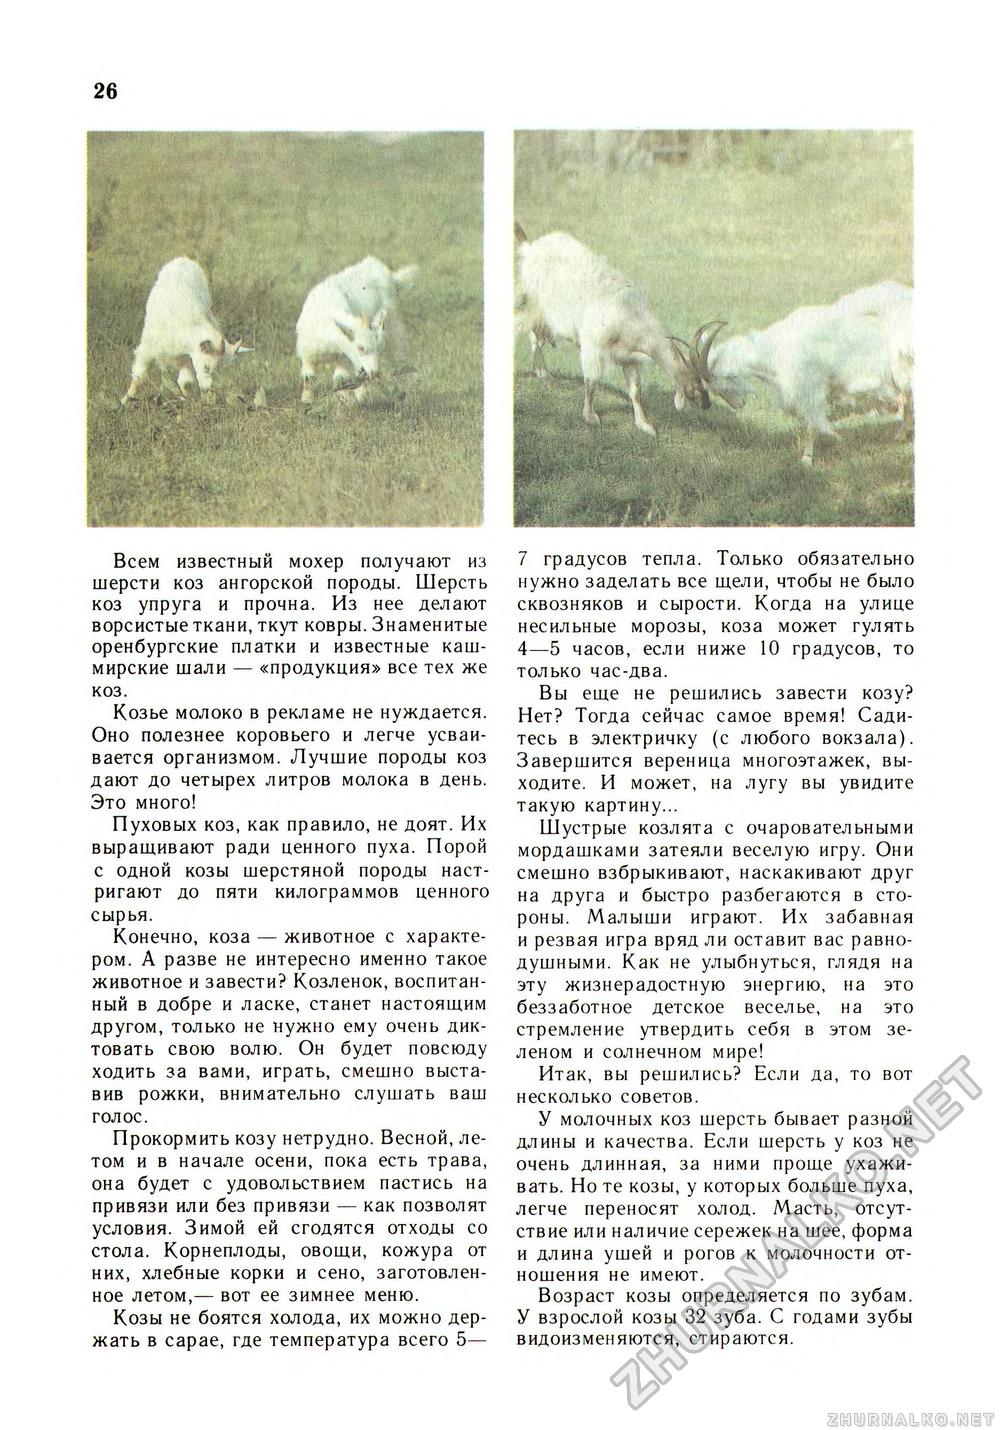 Юный Натуралист 1991-05, страница 28